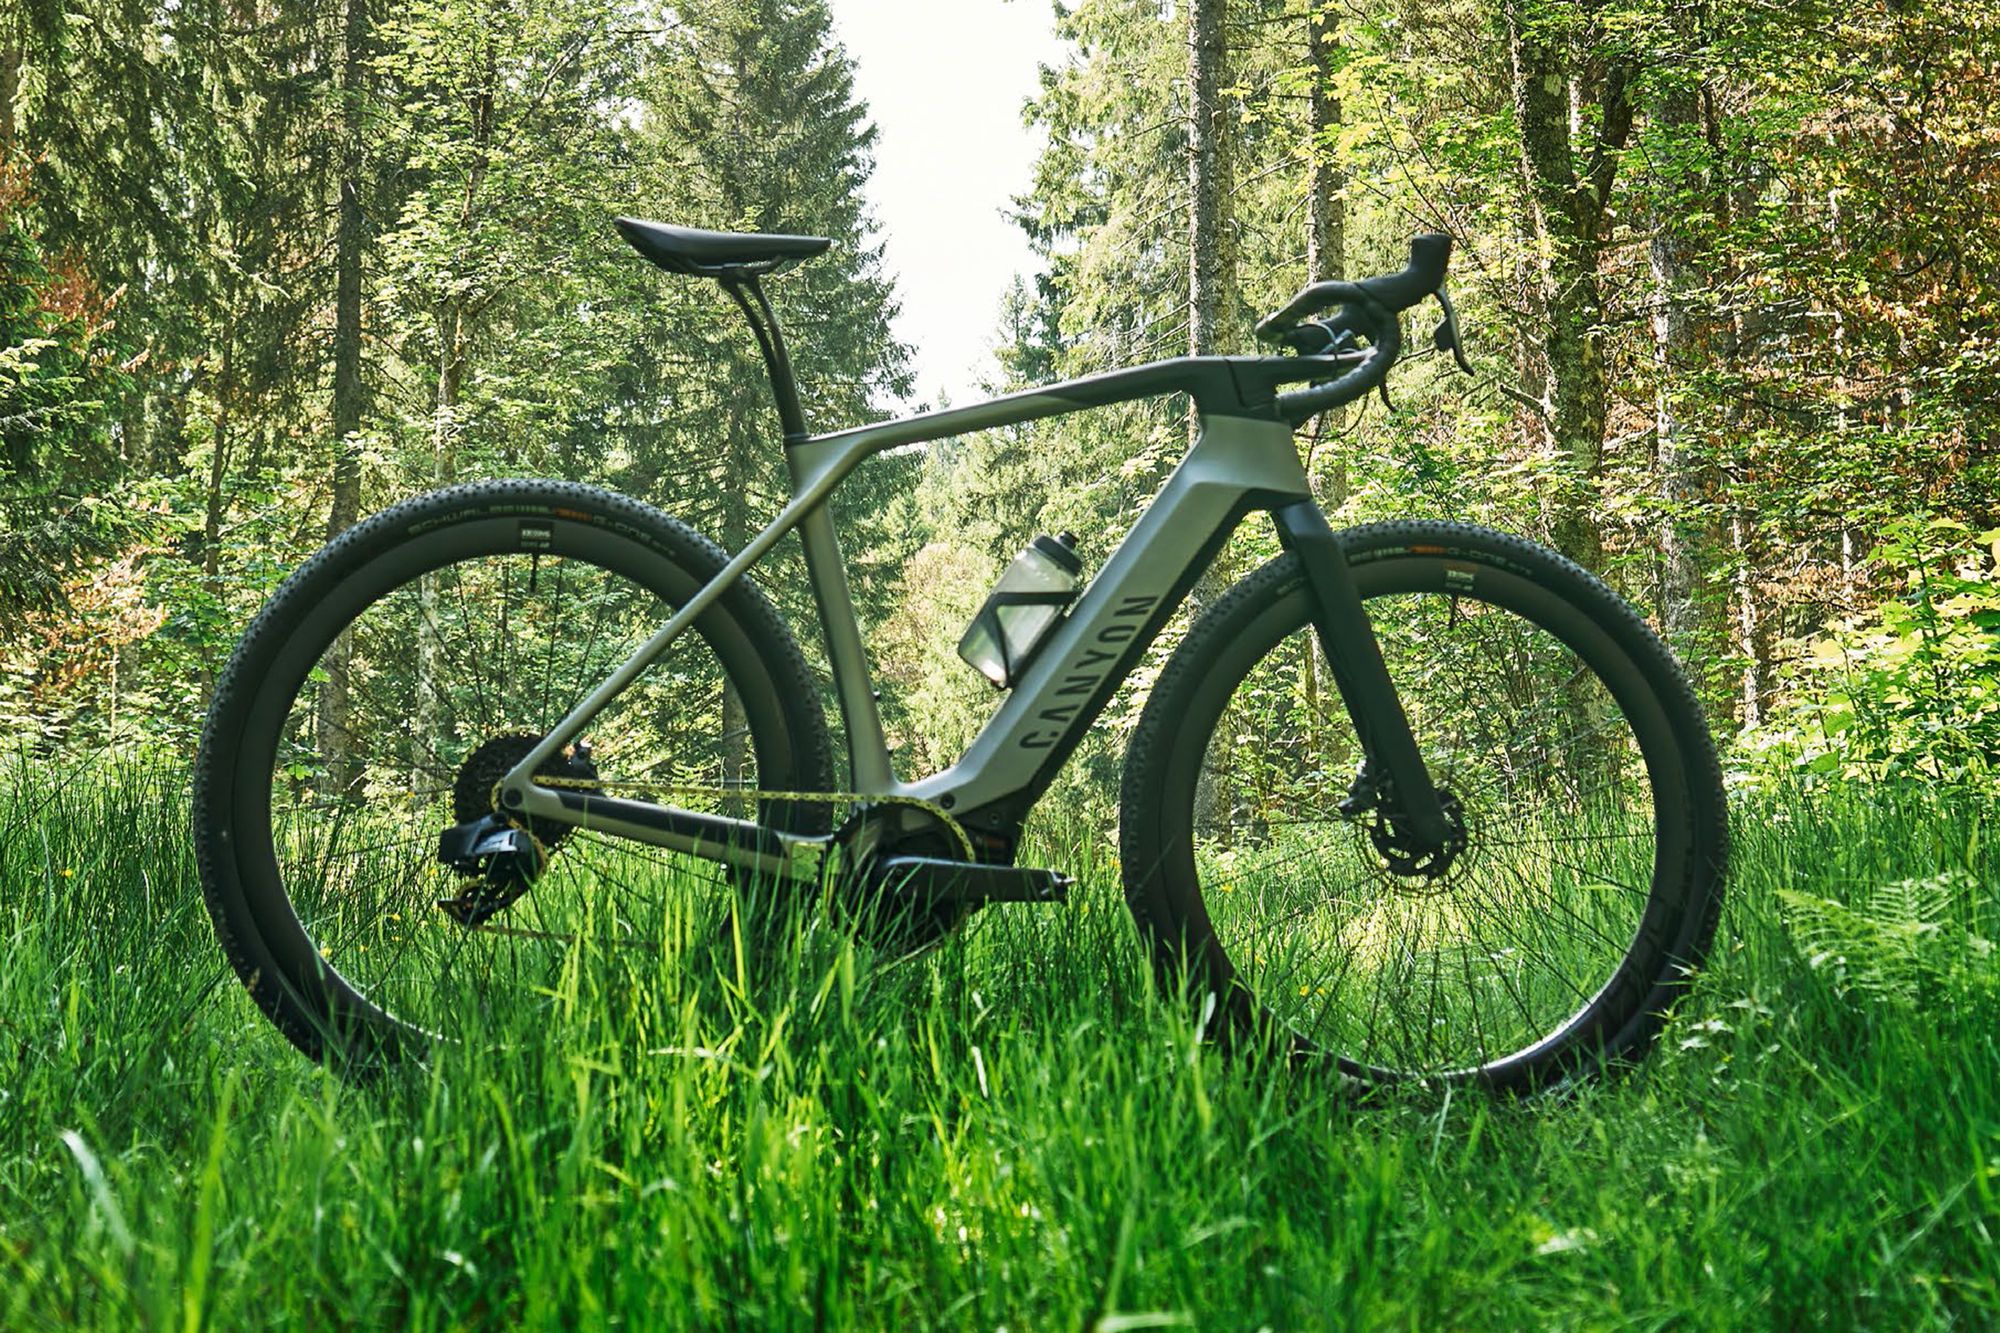 green electric bike